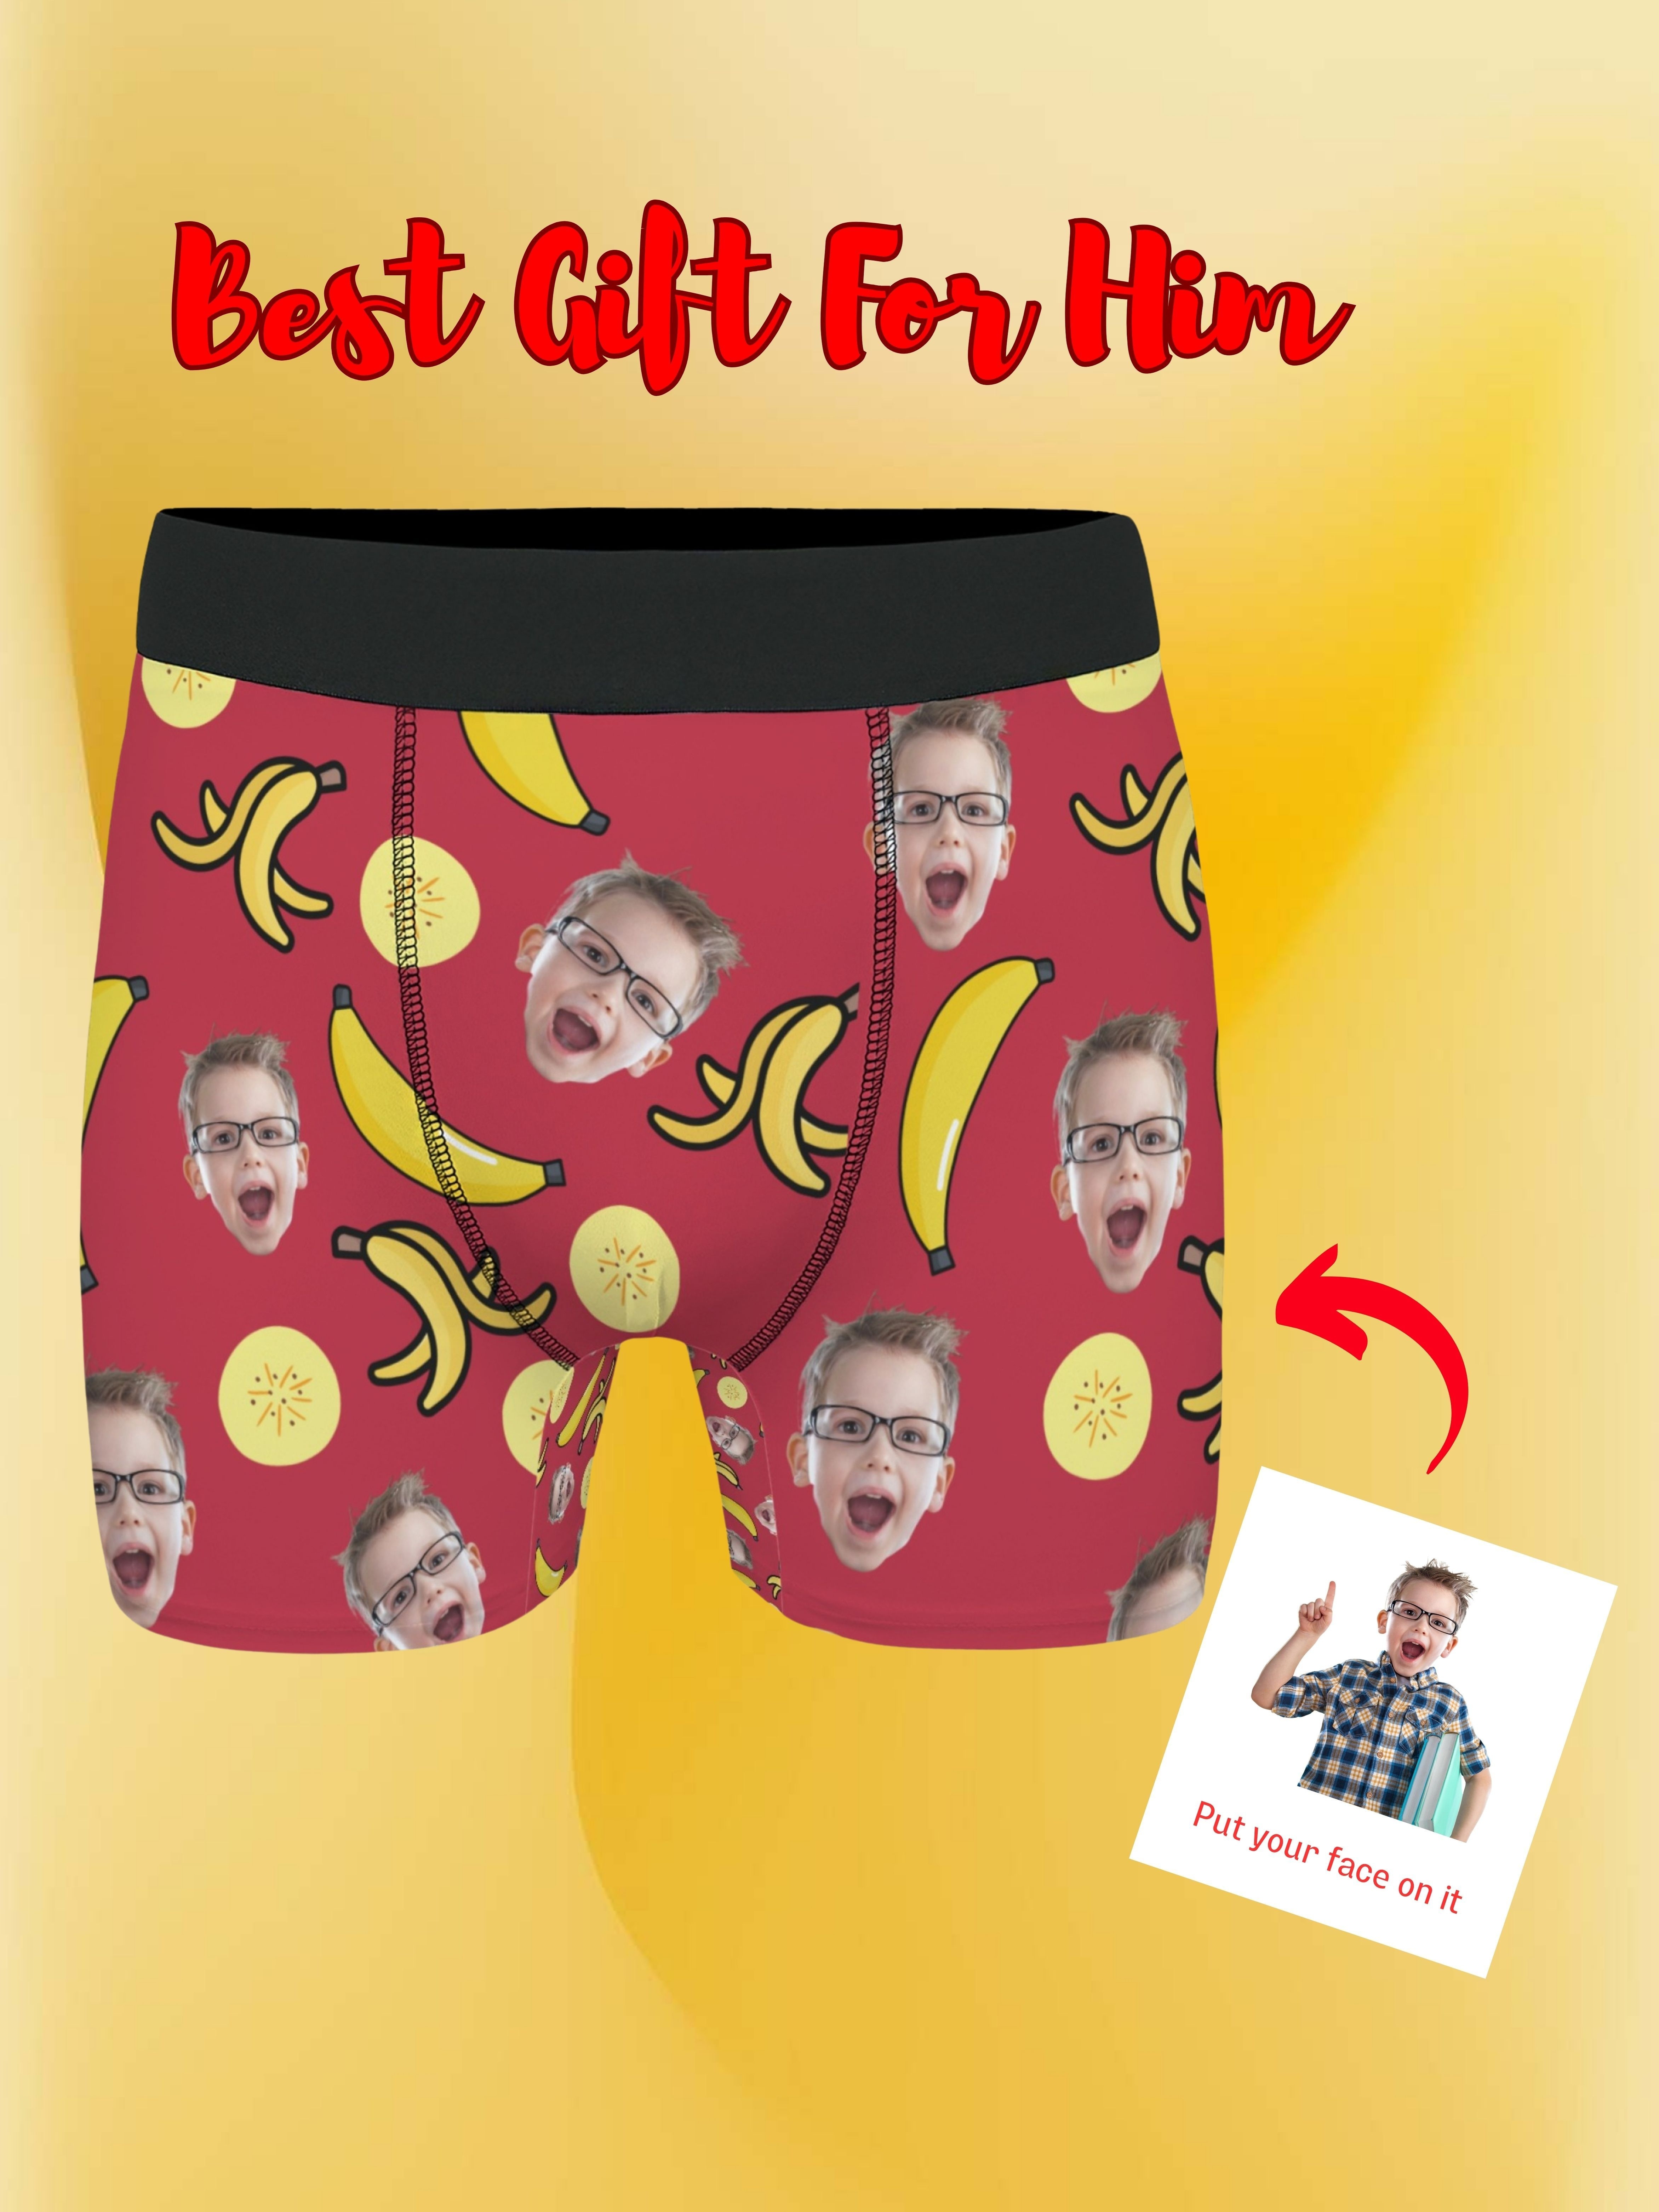 Fun print underwear with print bananas – GARÇON